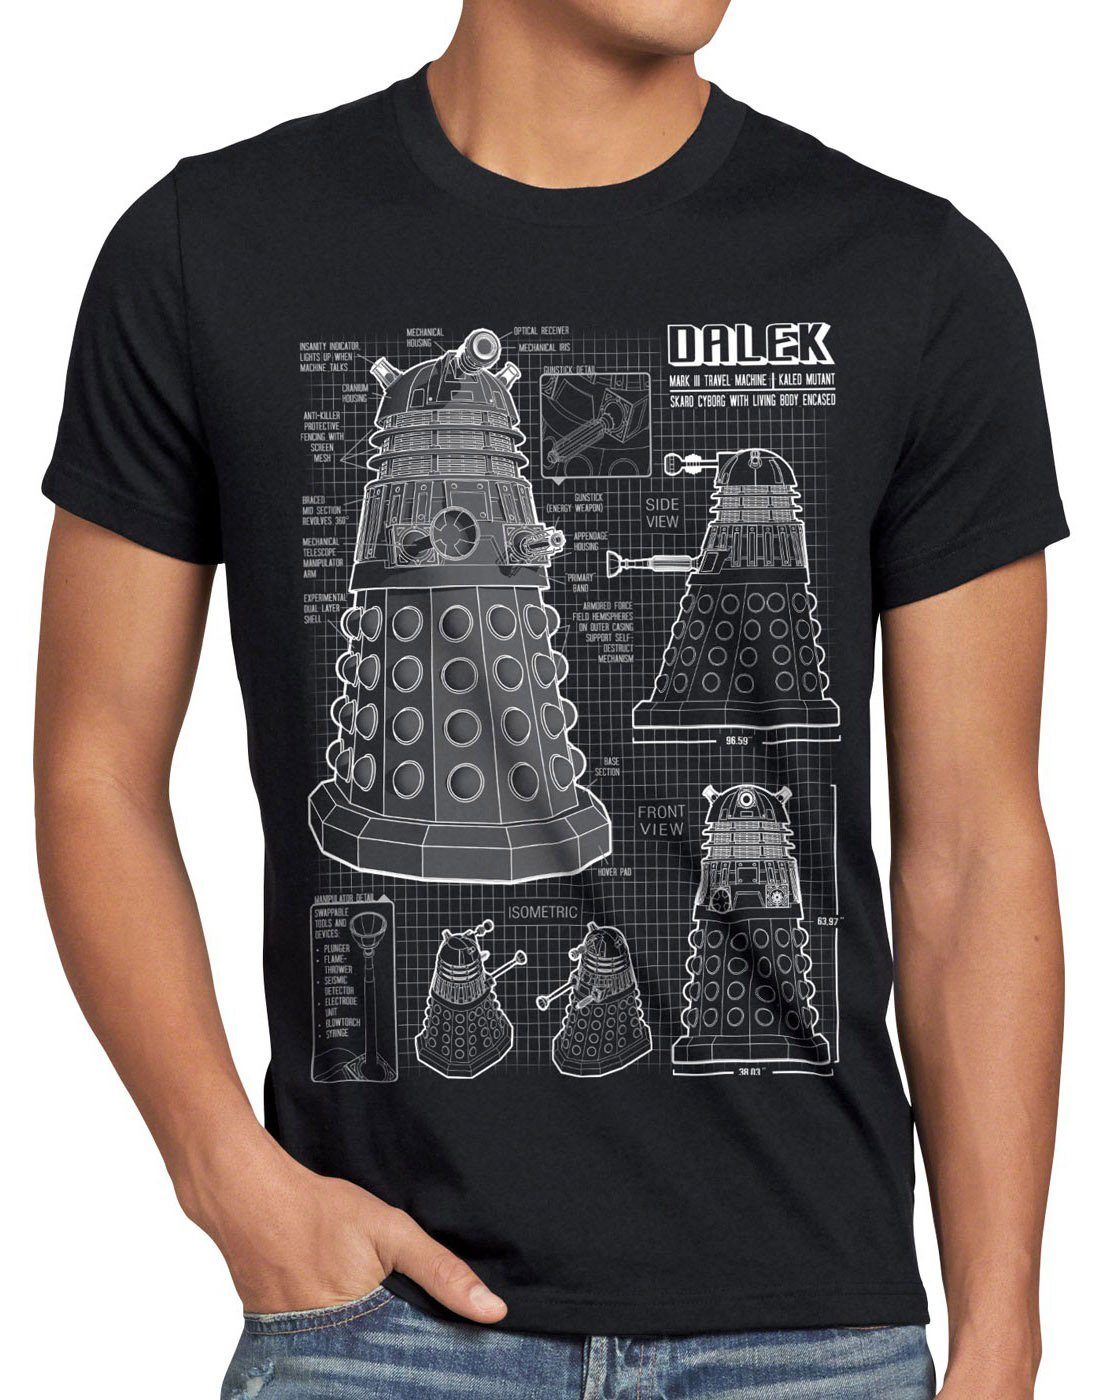 time Herren tv police doctor Print-Shirt zeitreise who dr amy style3 space schwarz box doktor T-Shirt Dalek